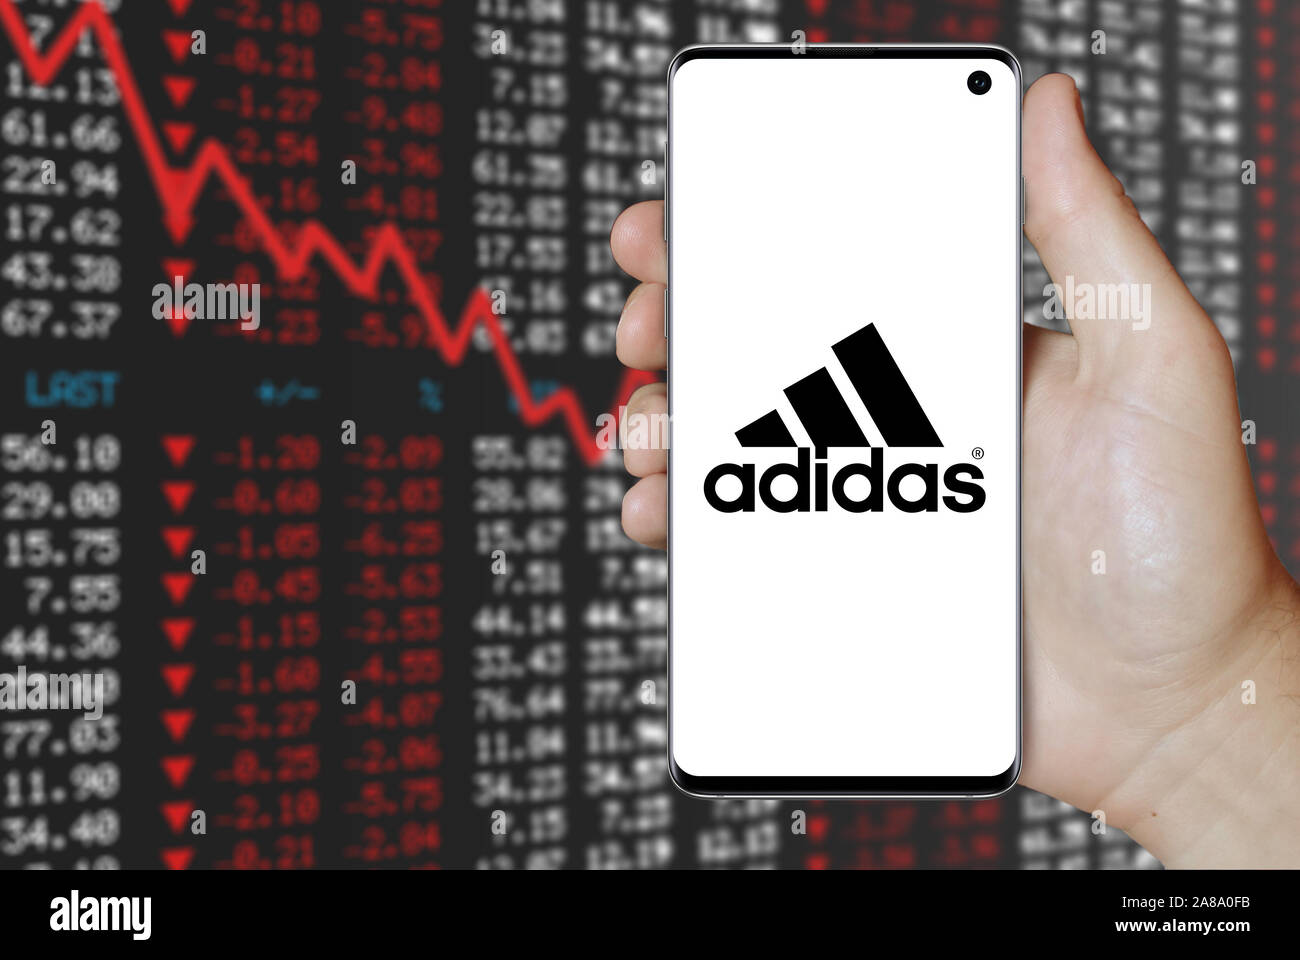 Logo of public company Adidas displayed on a smartphone. Negative stock  market background. Credit: PIXDUCE Stock Photo - Alamy